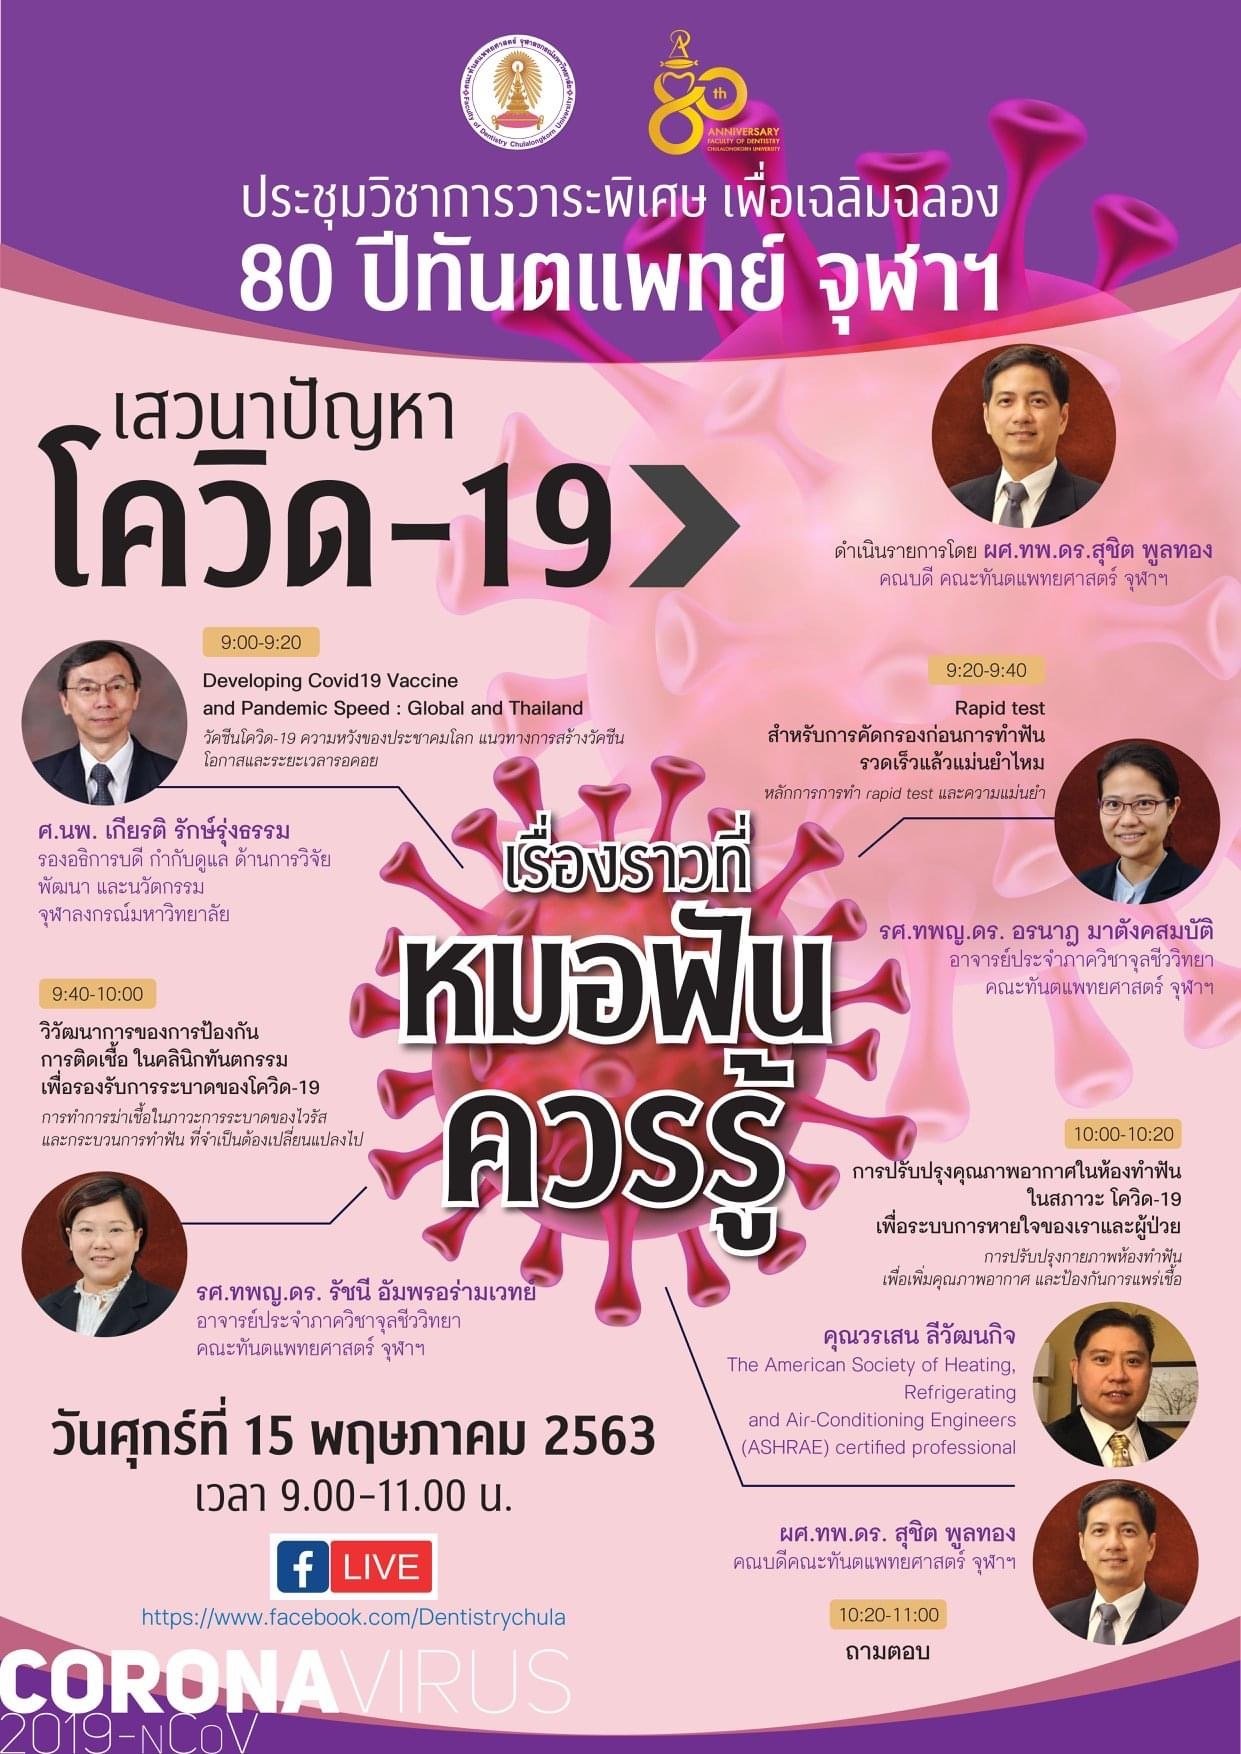 Covid-19 Dentistry Chulalongkorn University